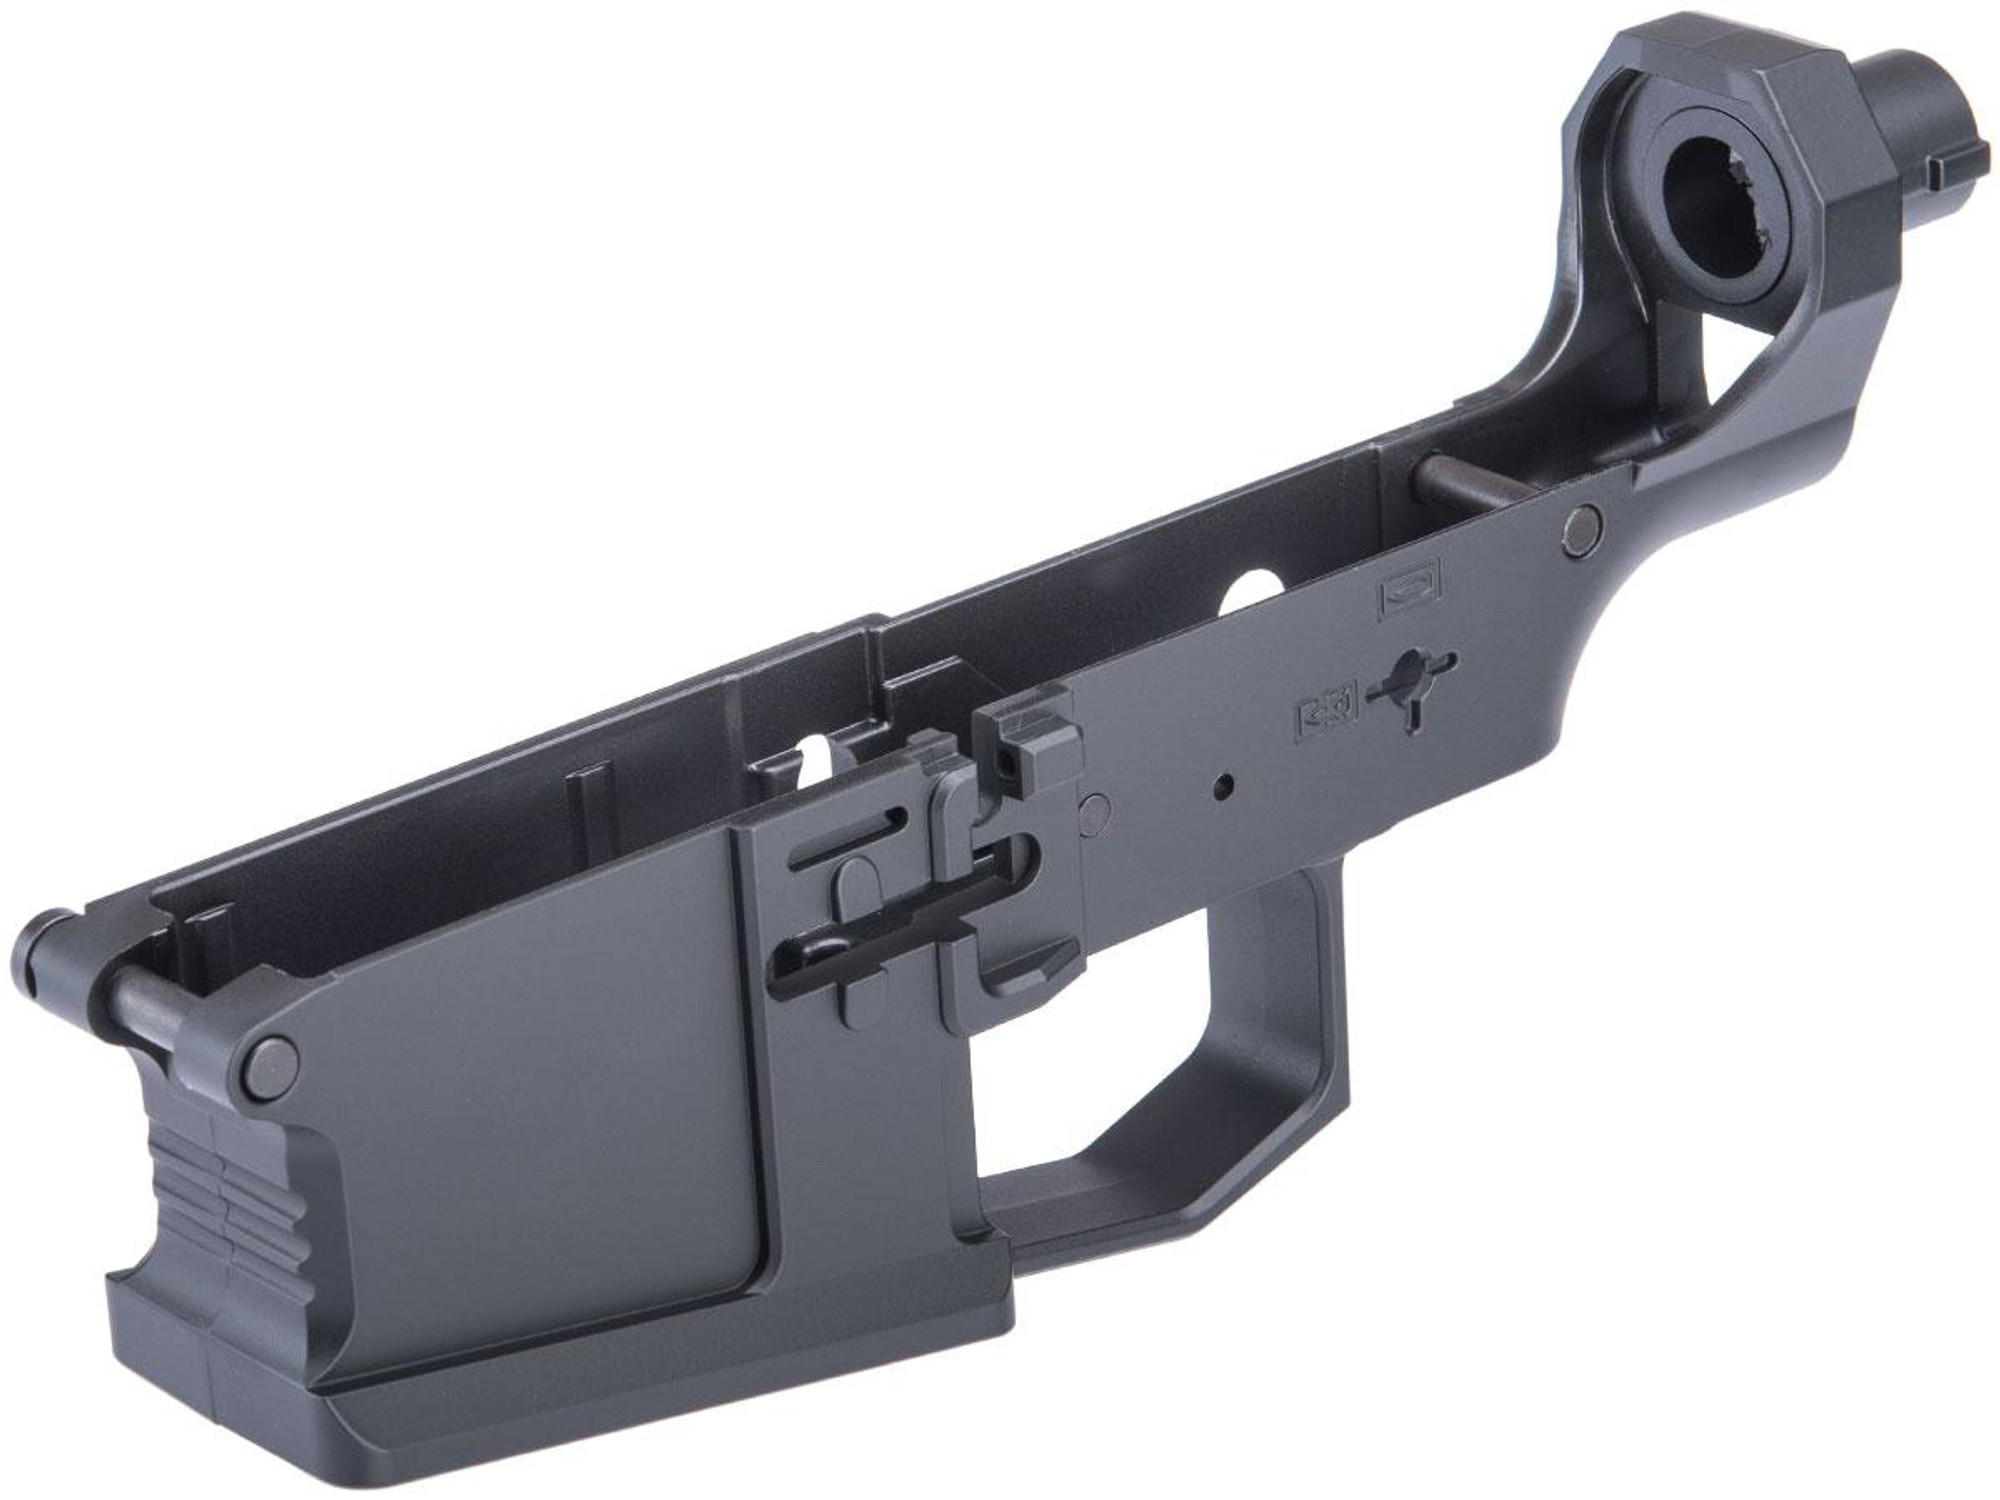 Matrix "Zion" Billet Style Metal Receiver for CYMA Platinum QBS Airsoft AEG Rifle (SR-25)